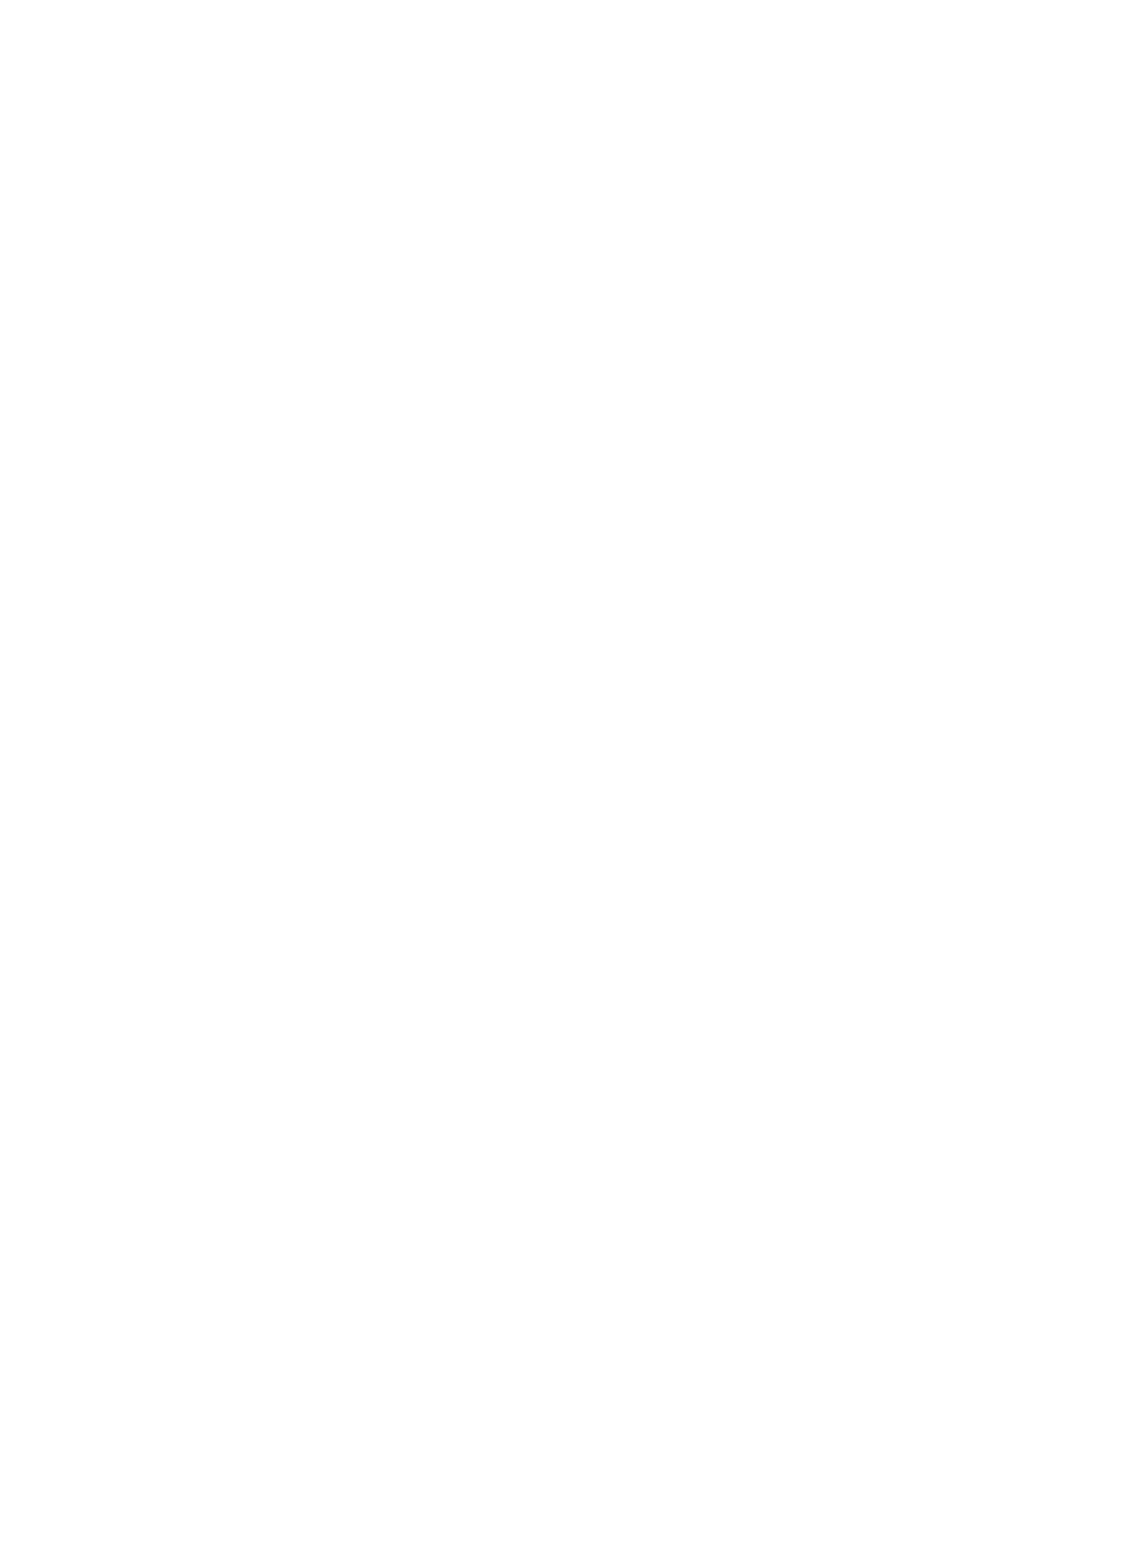 Coal India logo large for dark backgrounds (transparent PNG)